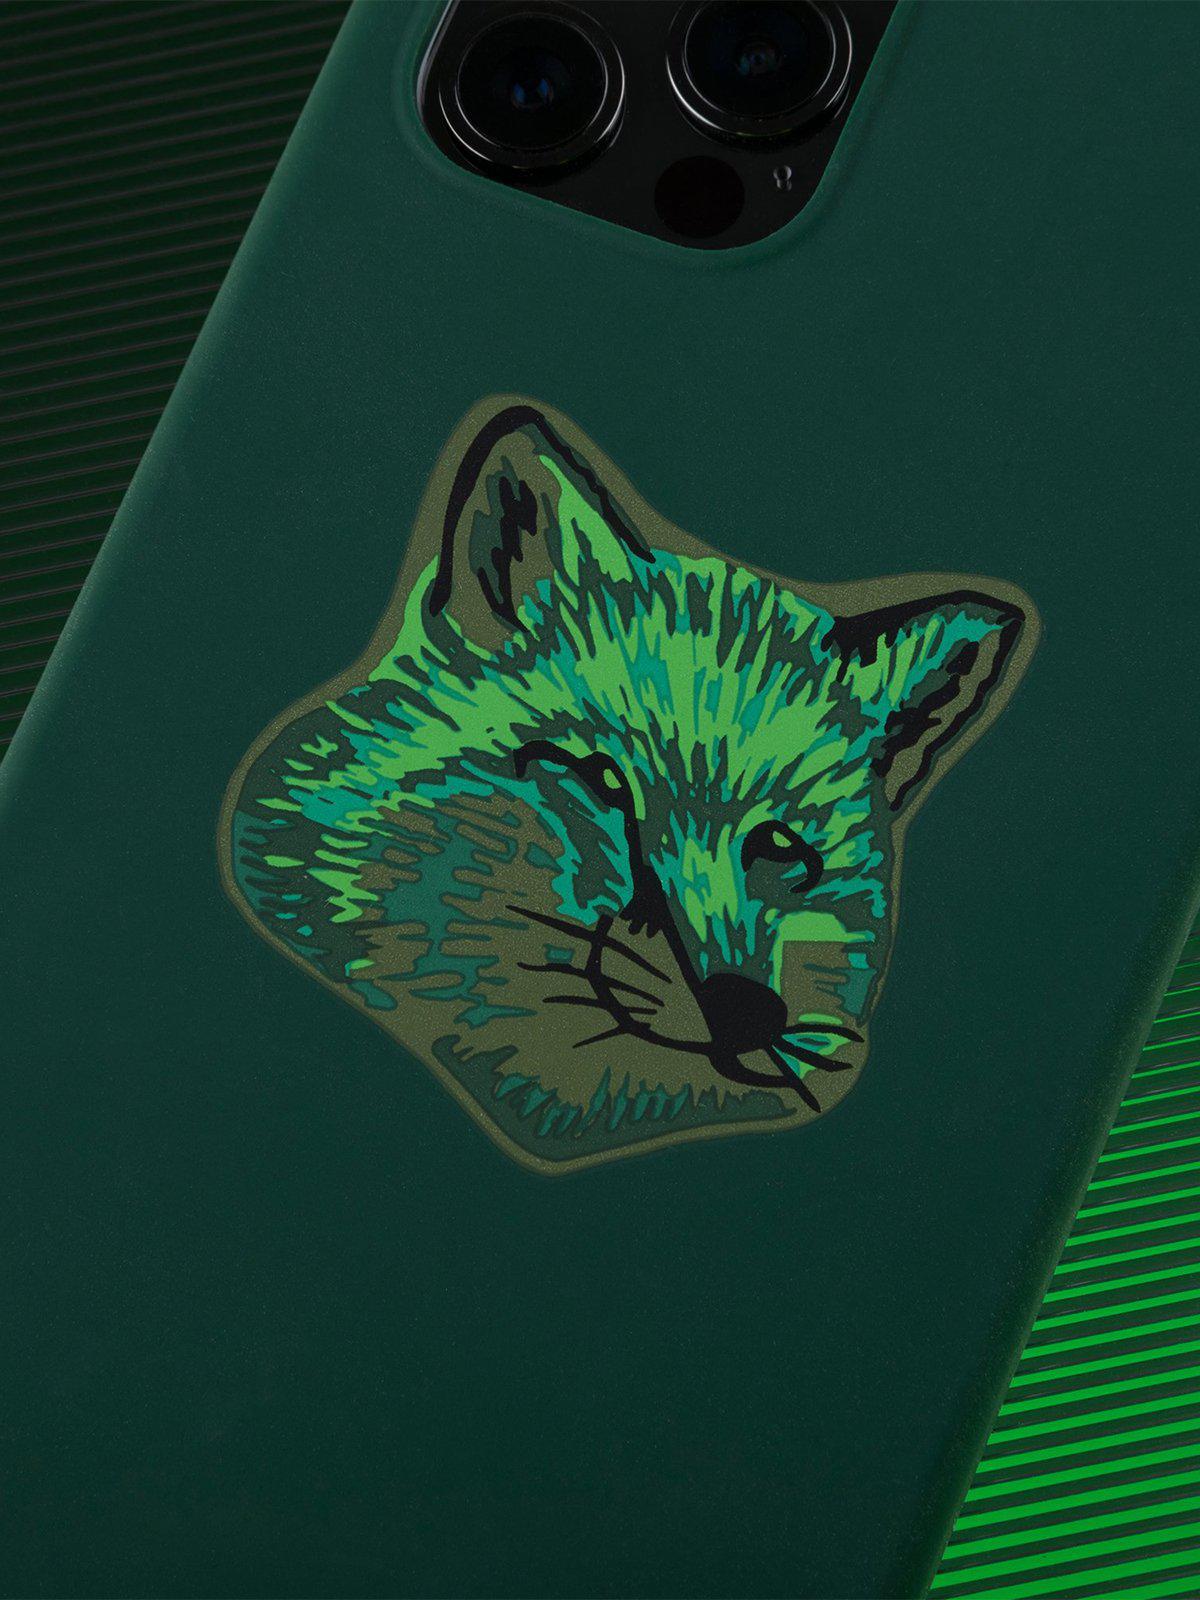 Native Union x Maison Kitsune Cool-Tone Fox Head Case for iPhone 12 / 12 Pro Green